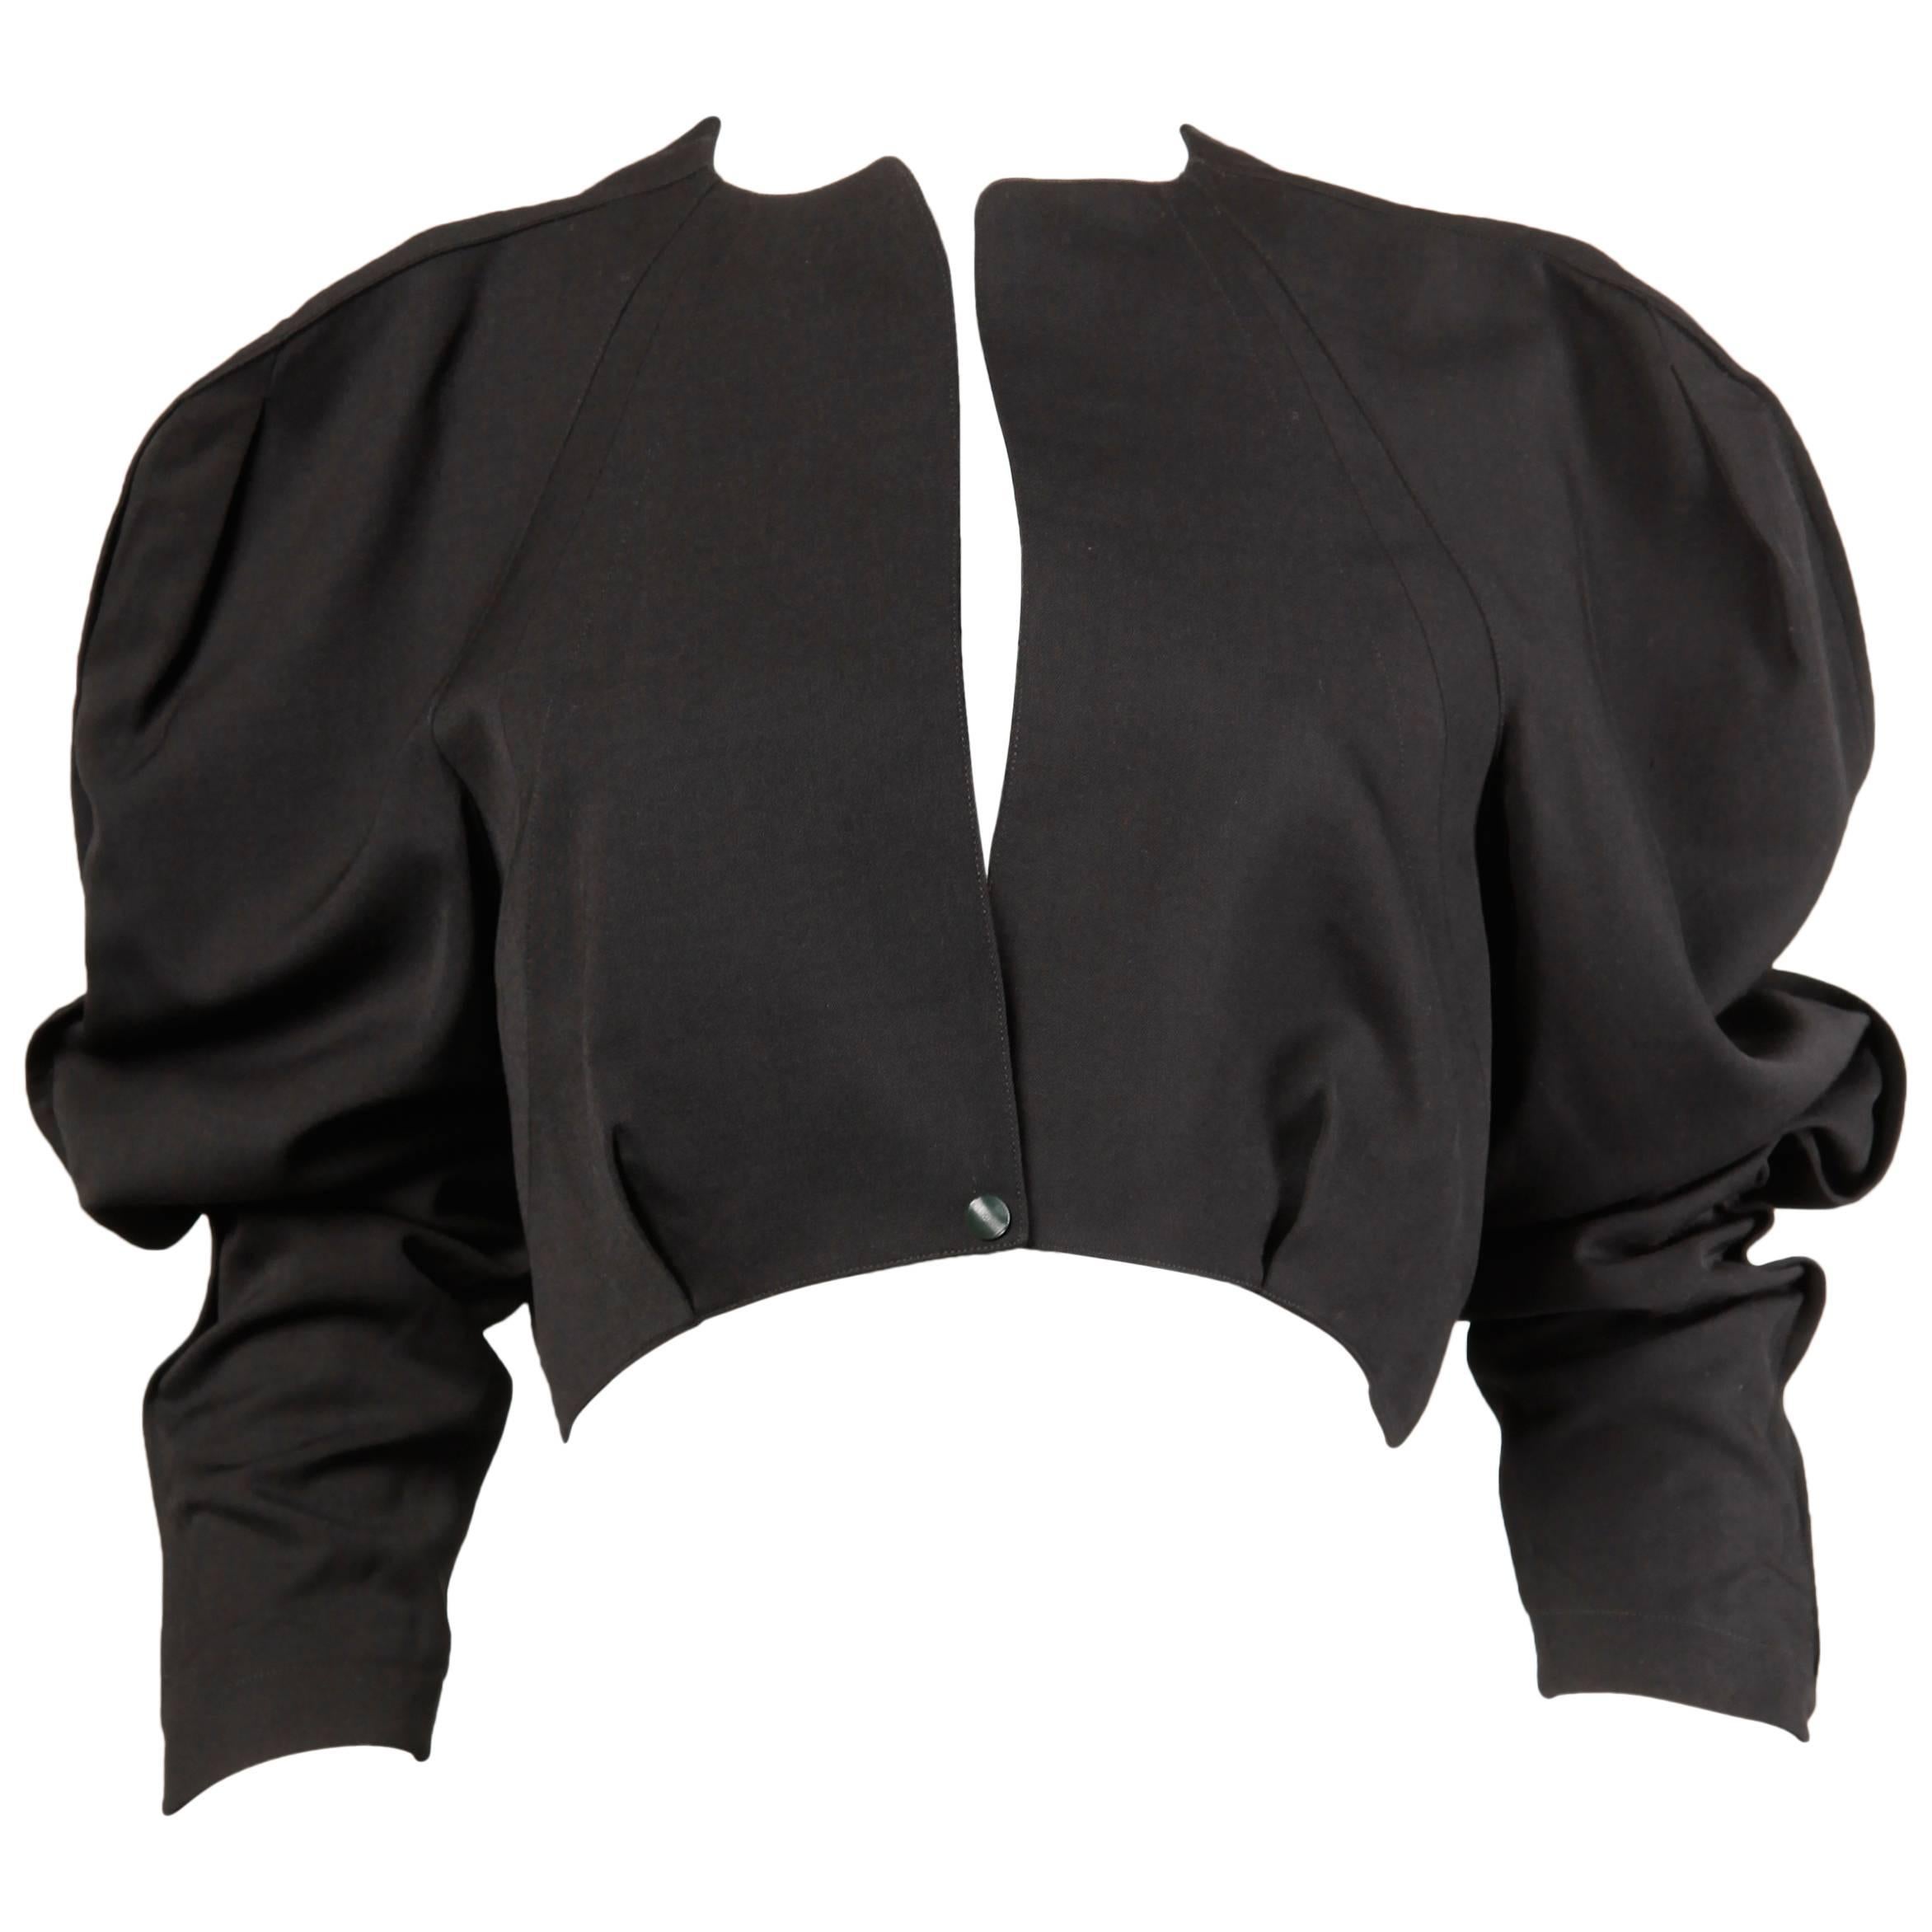 Thierry Mugler 1980s Vintage Black Avant Garde Balloon Sleeve Jacket